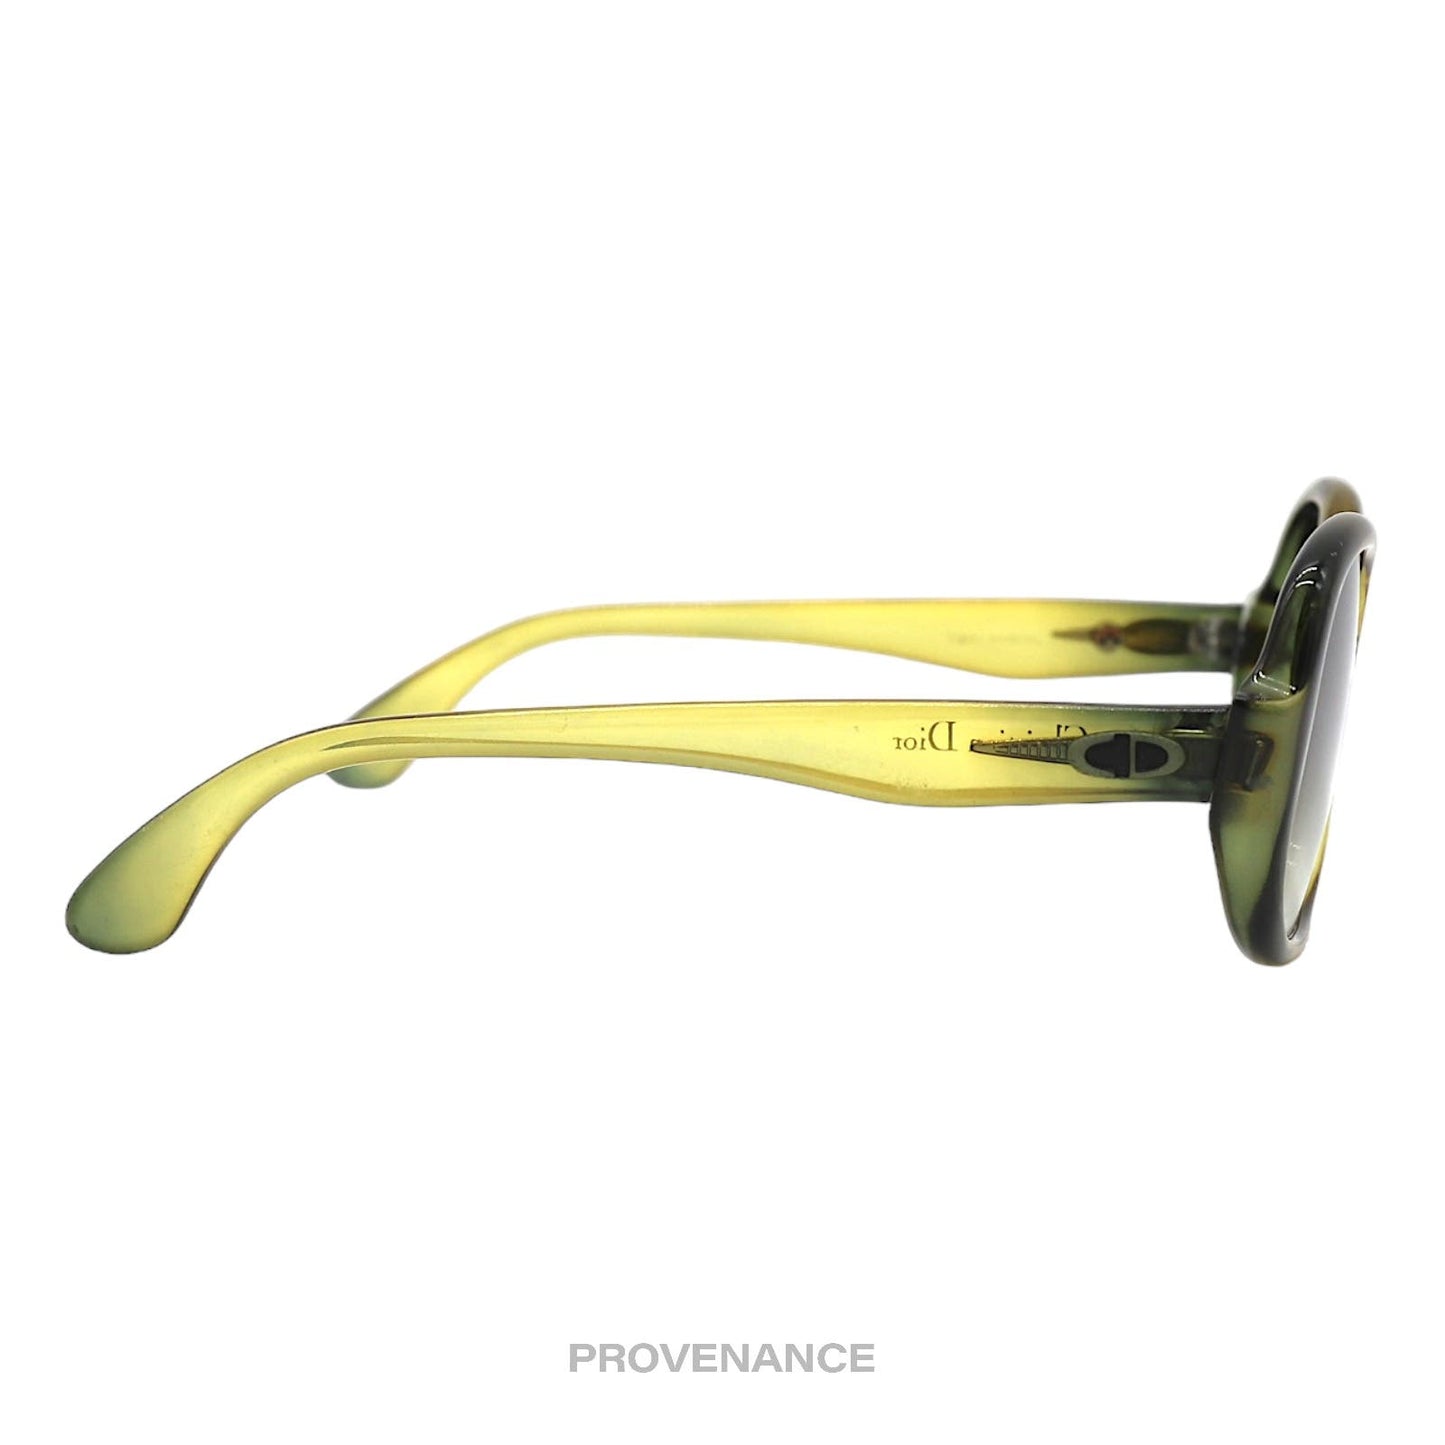 🔴 Christian Dior Optyl Vintage Sunglasses - Green Yellow